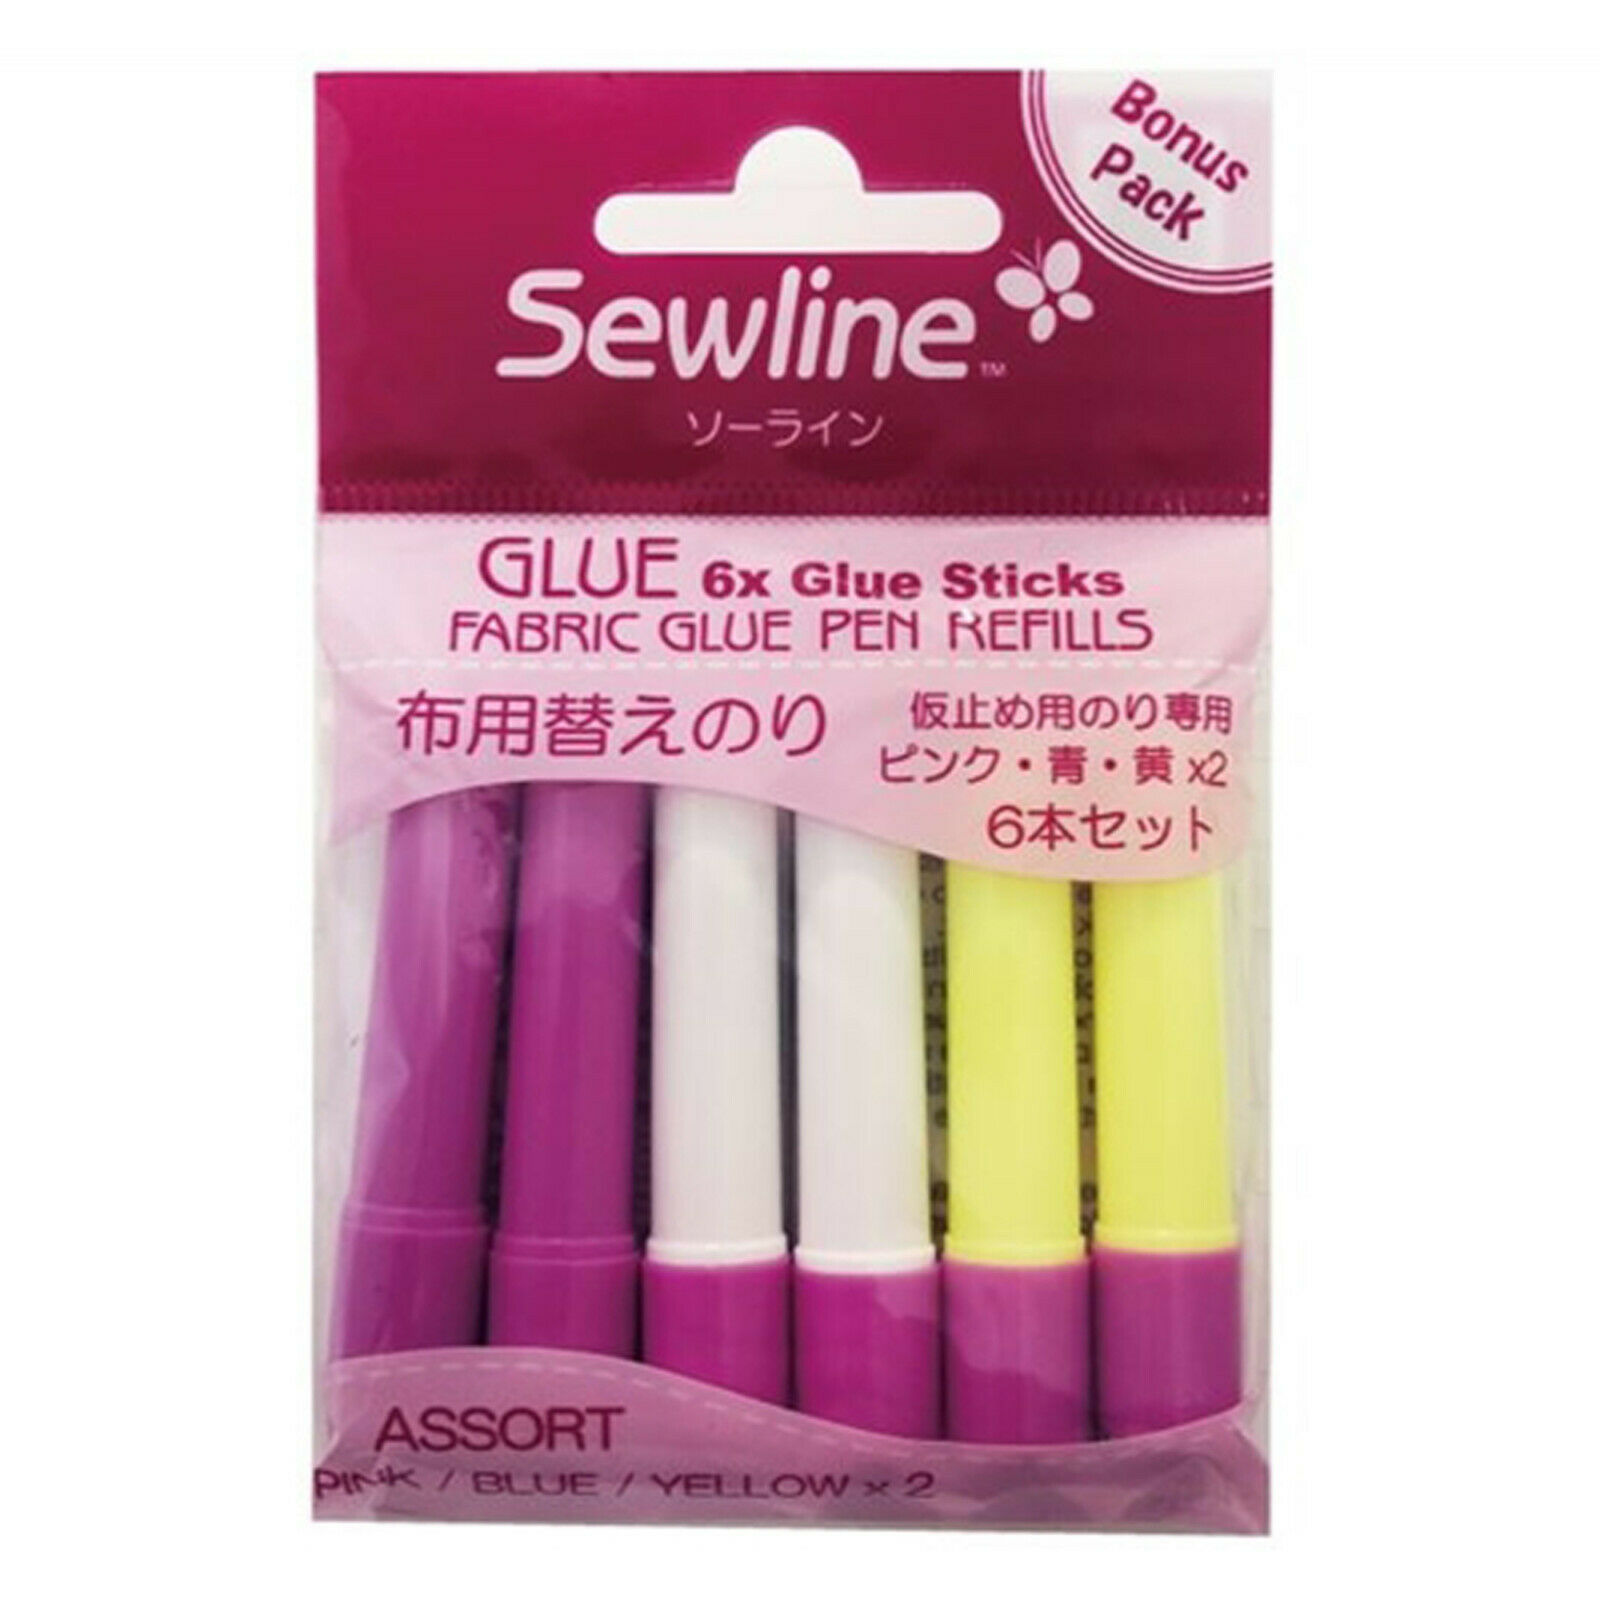 Sewline Glue Refill Bonus Pack Pink/Blue/Yellow 6 Glue Sticks